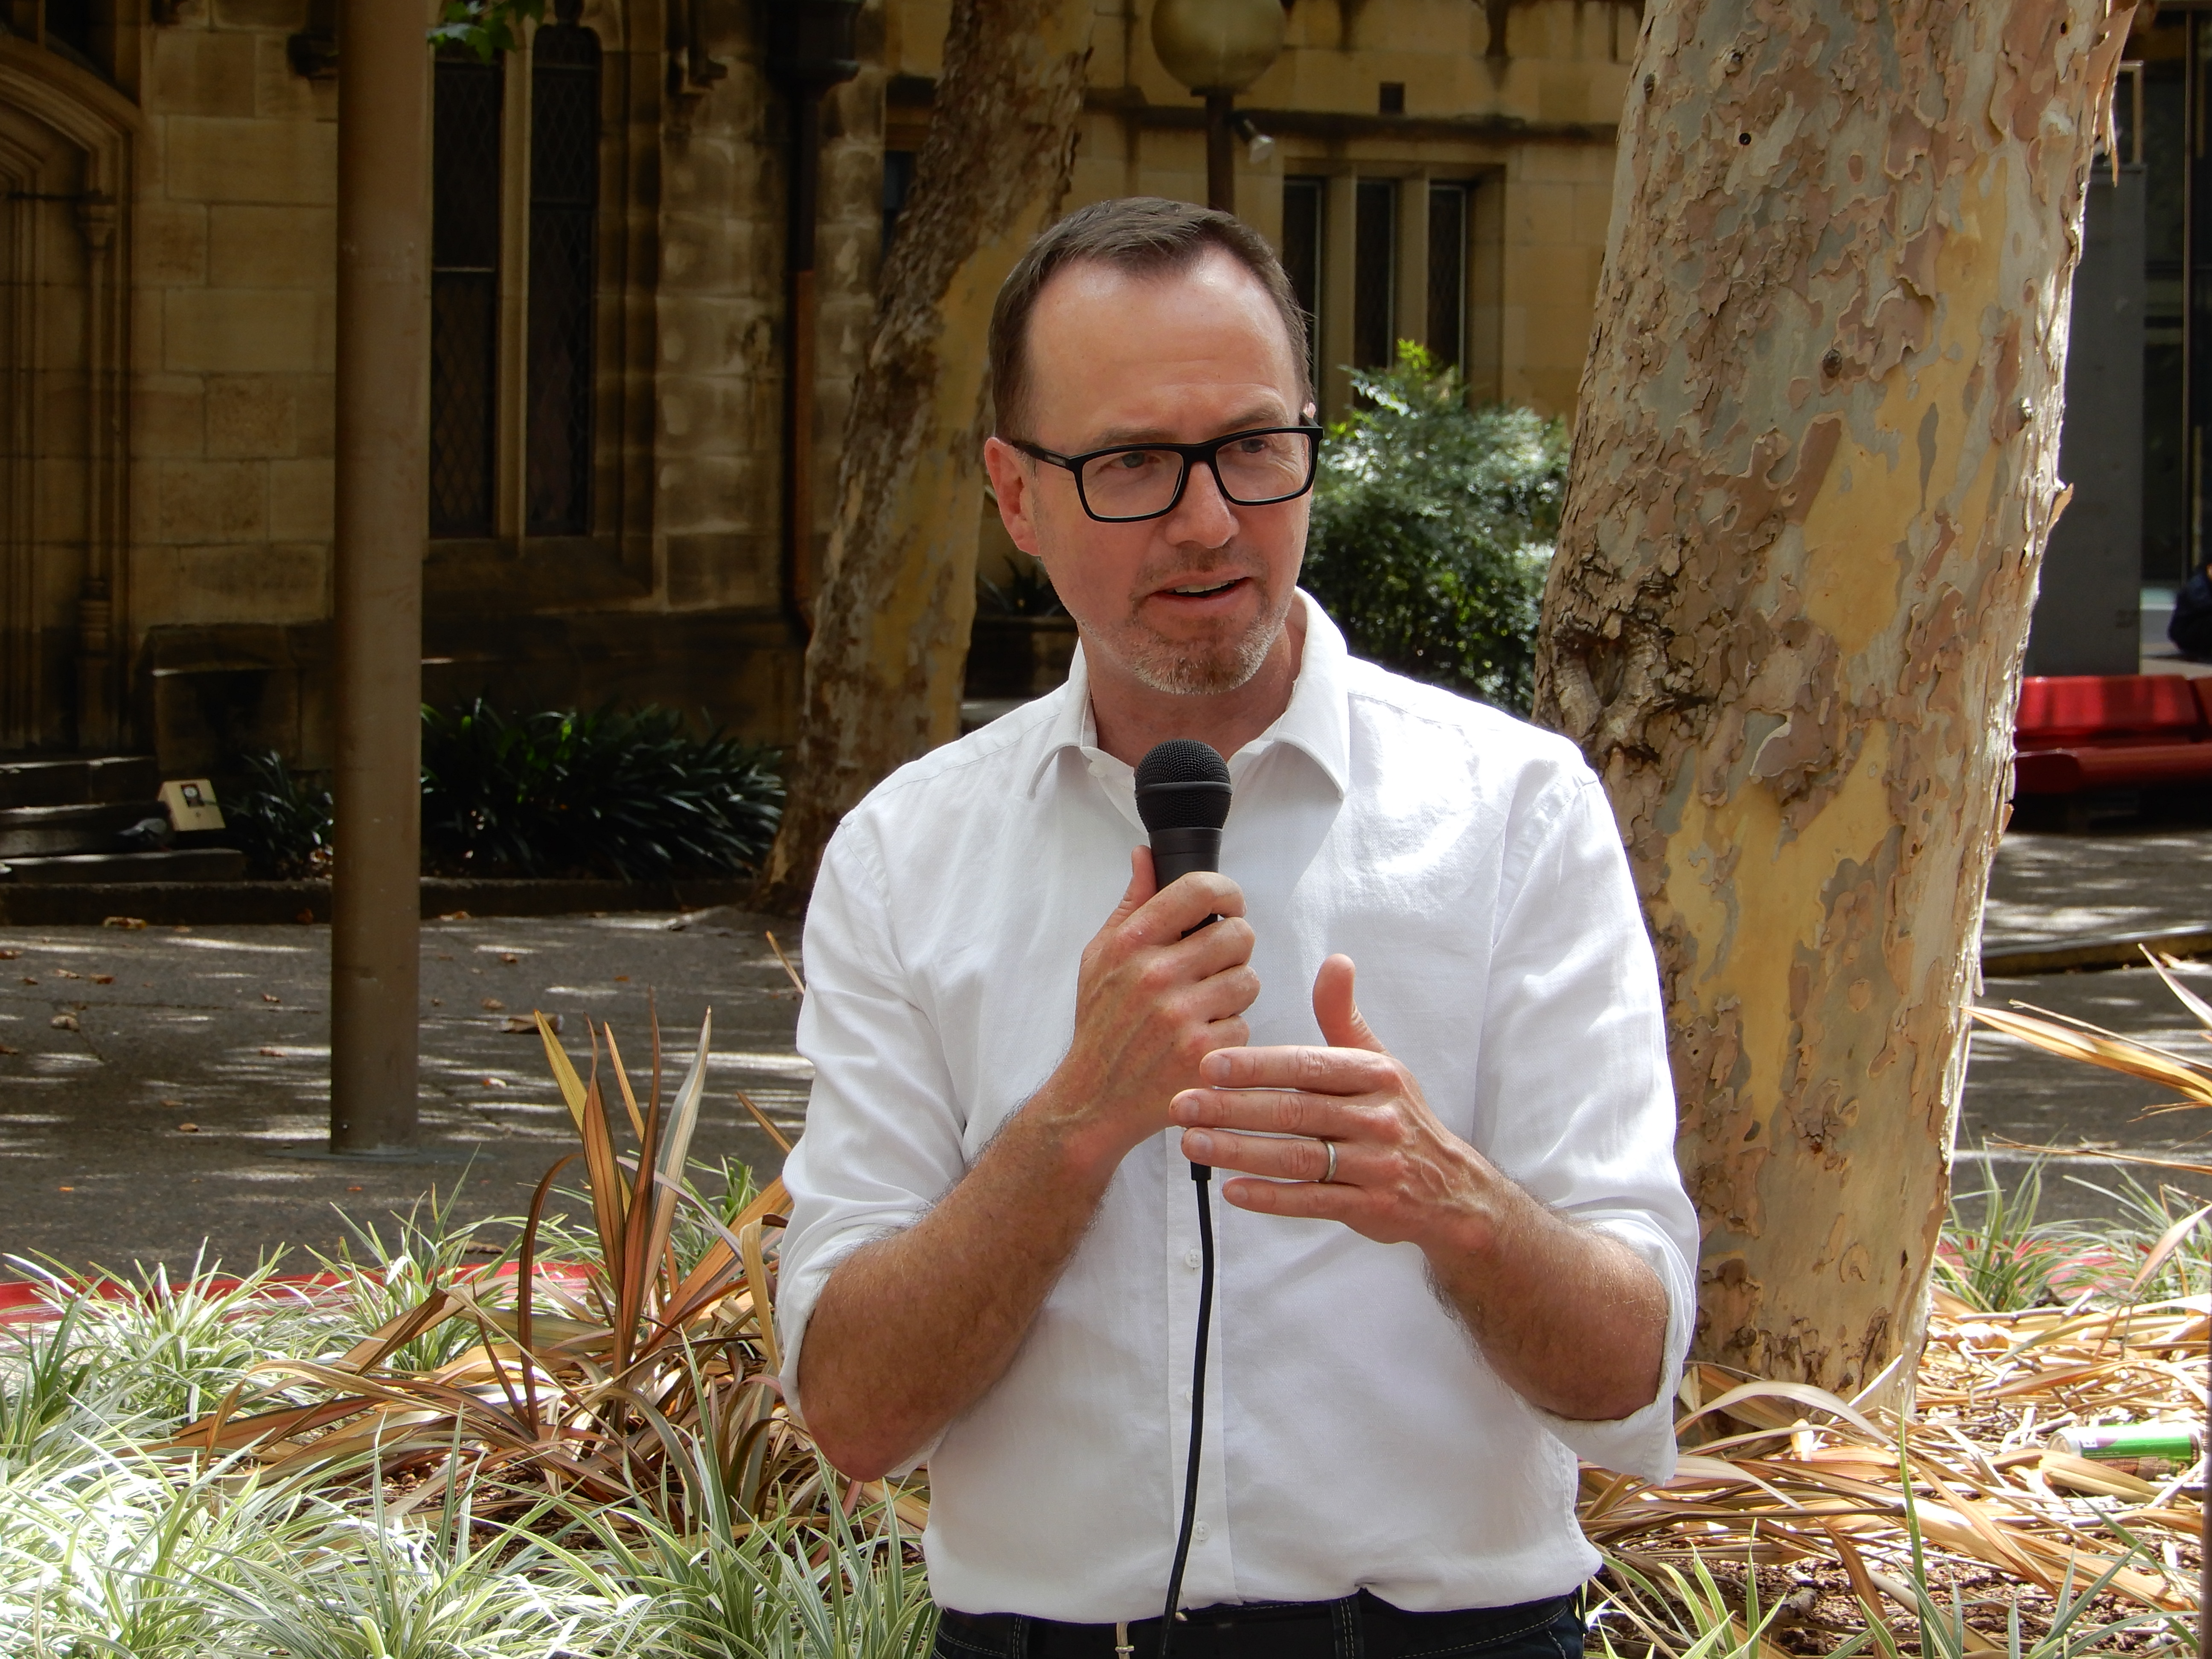 NSW Greens MLC David Shoebridge chairs the parliamentary inquiry into state grants programs